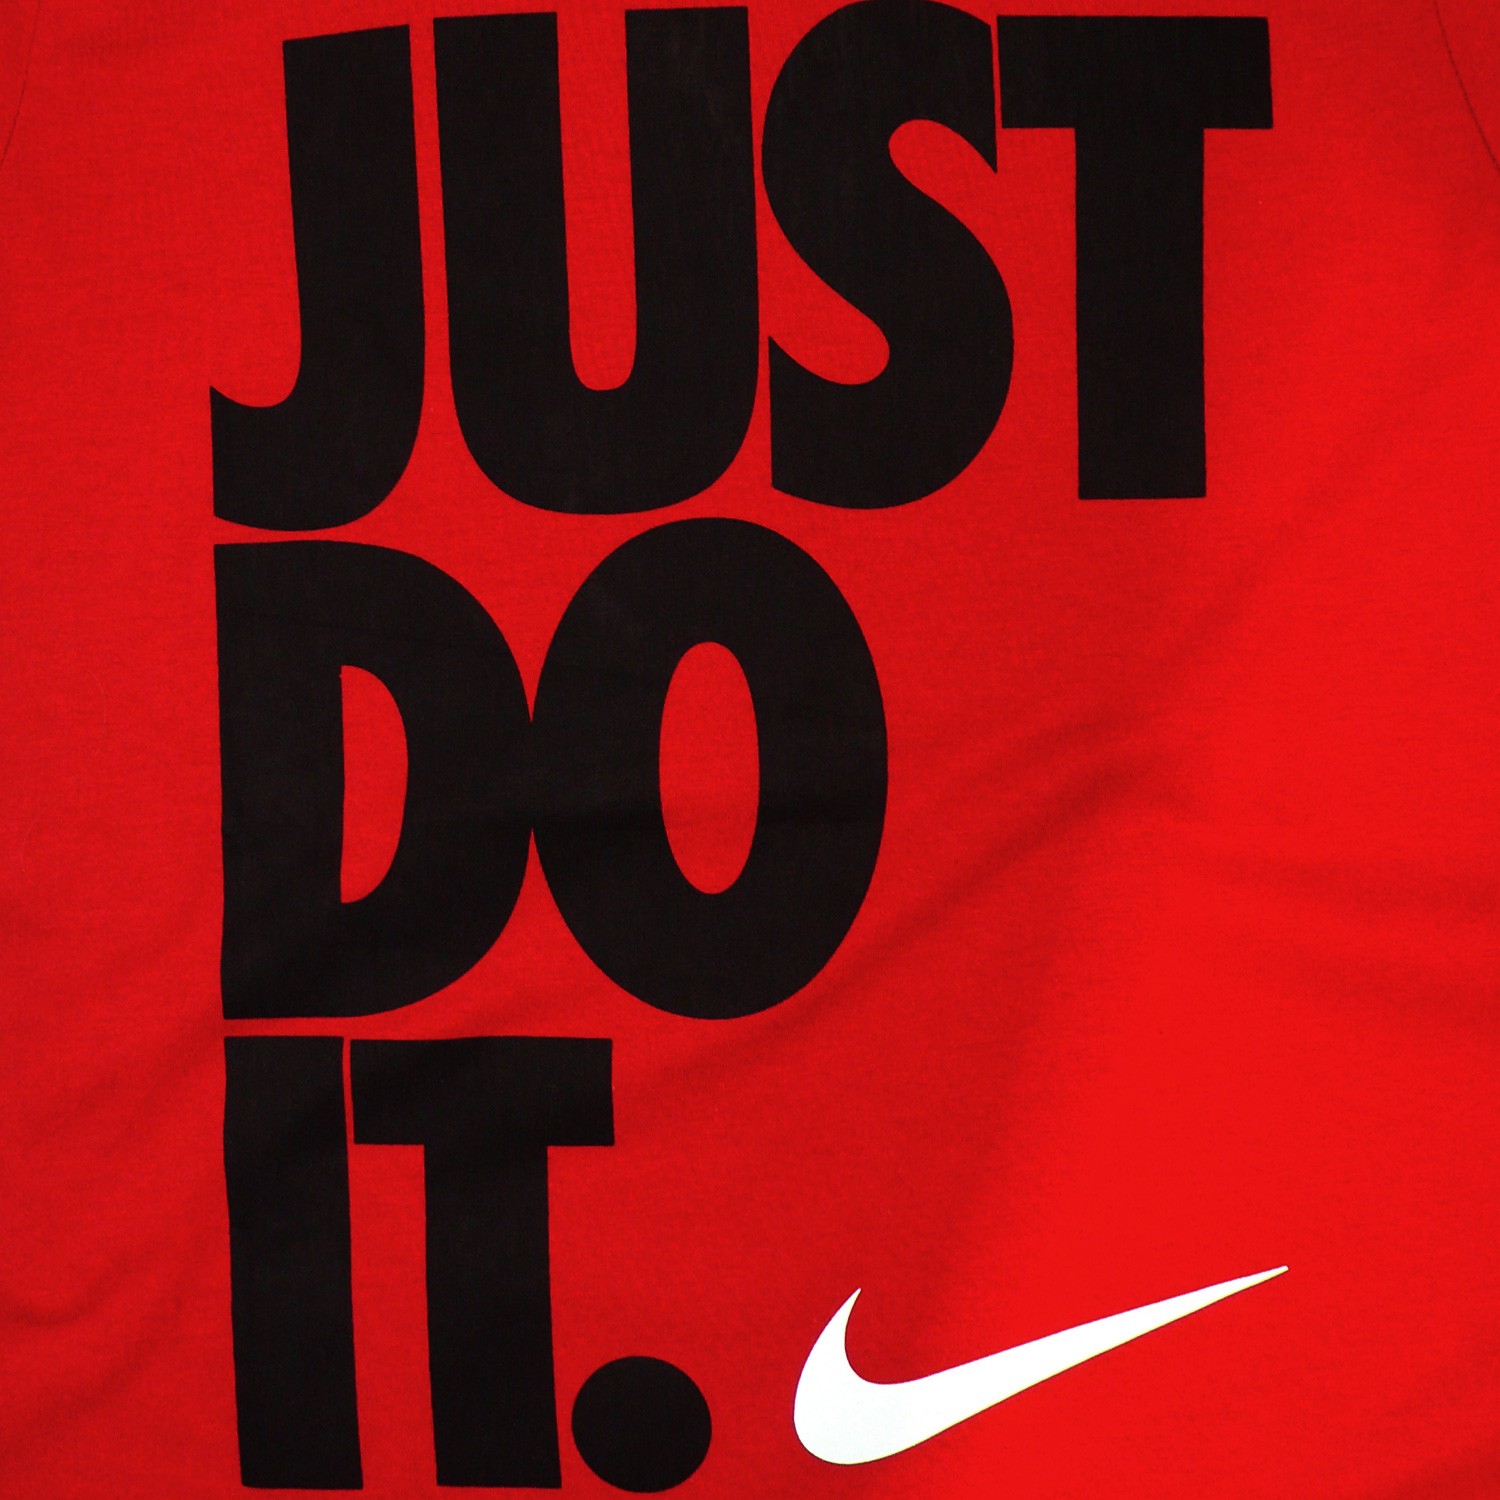 Just do it game. Nike just do it лого. Лозунг найк. Just do it логотип. Слоган Nike just do it.